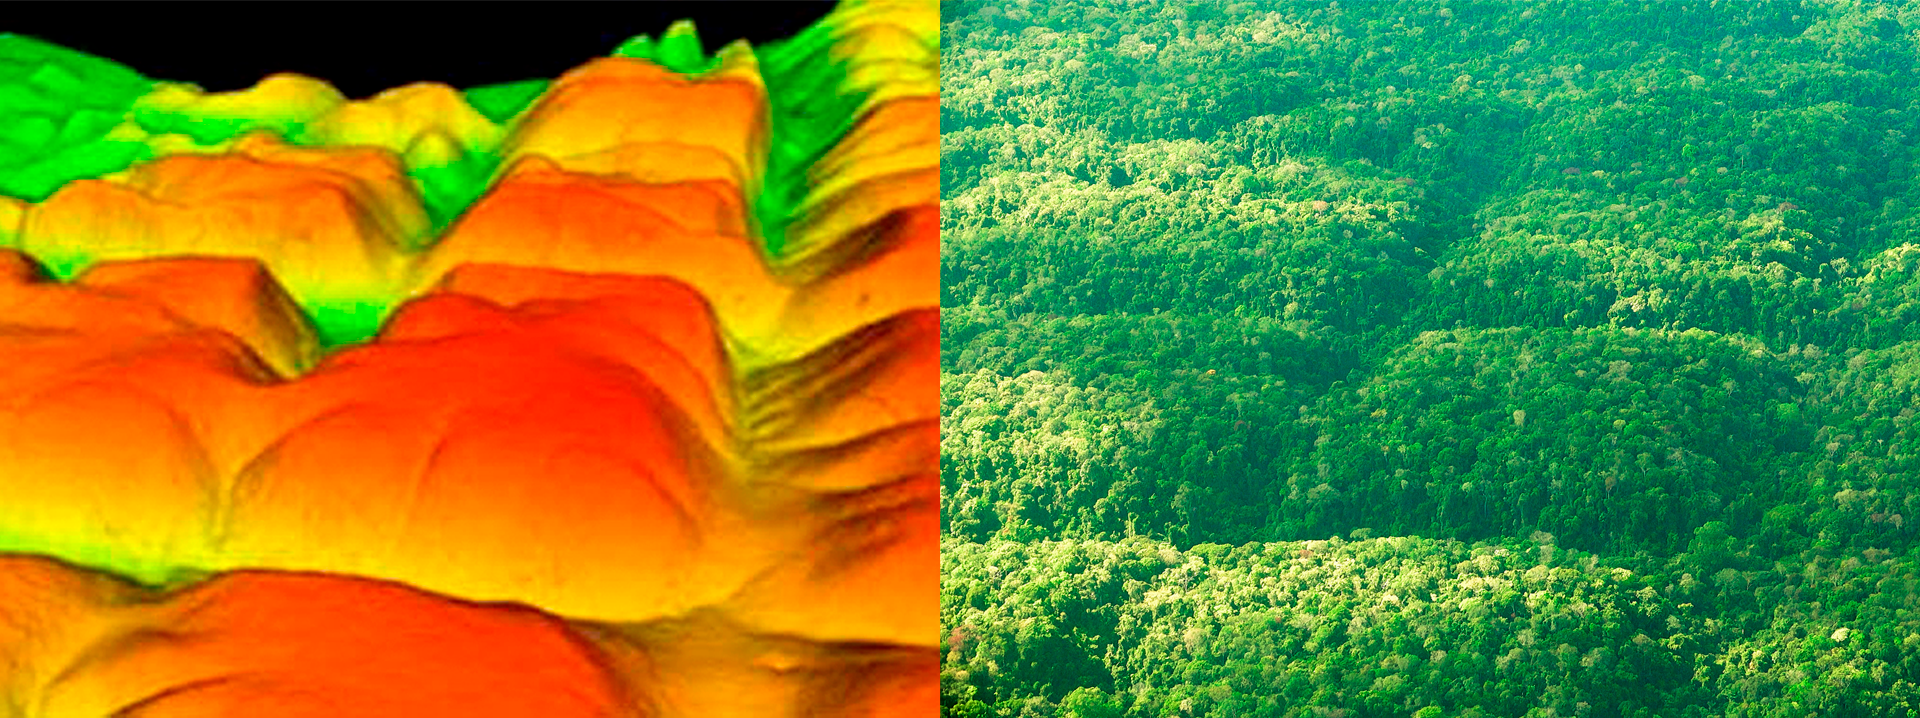 LiDAR Digital Terrain Model (DTM) - surface without vegetation and photo of blocks with vegetation